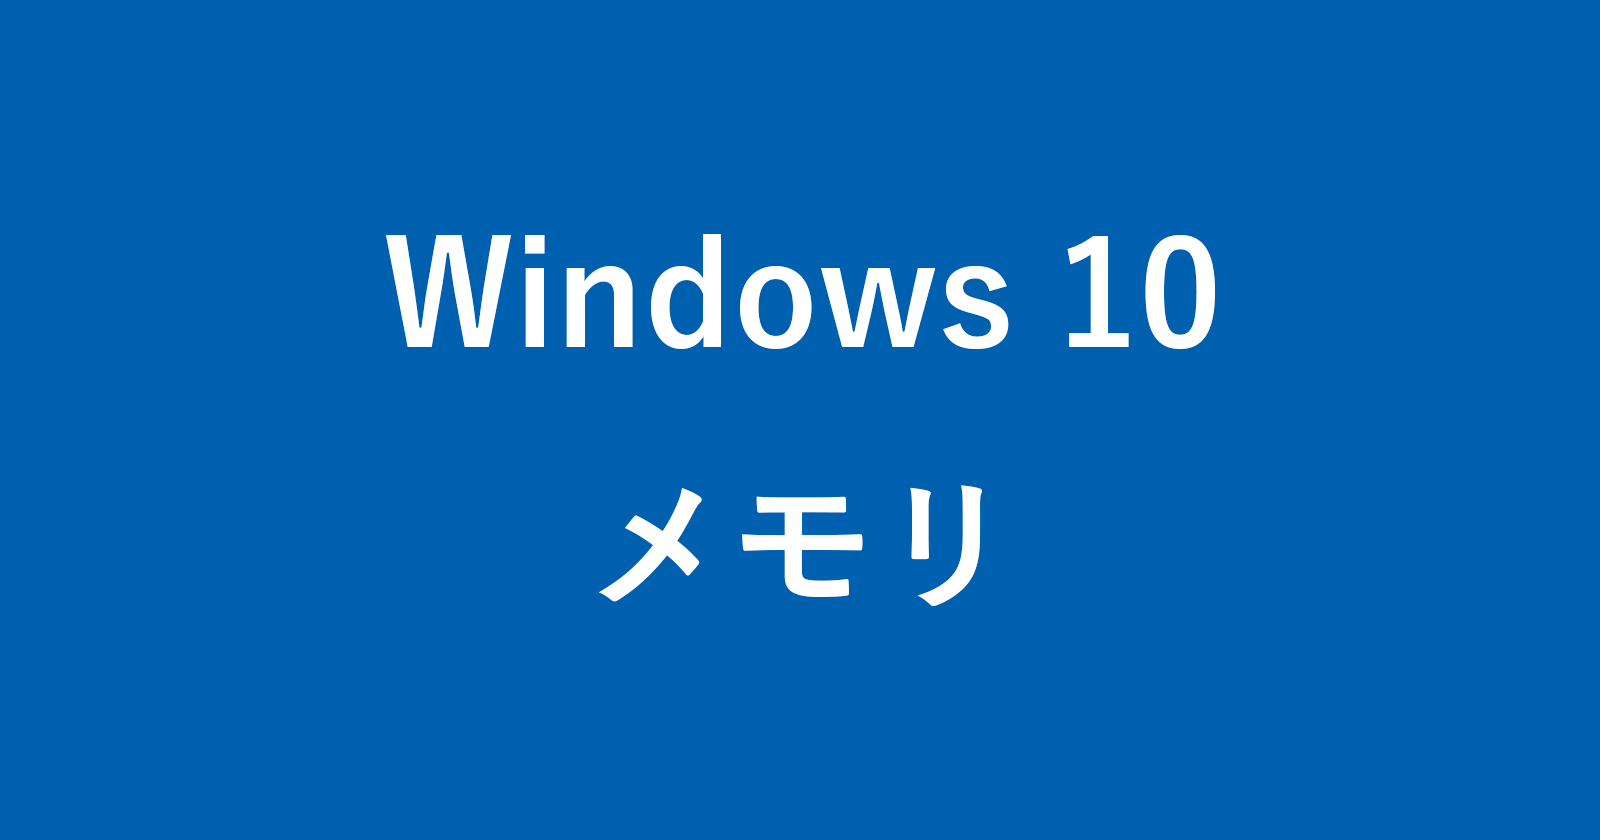 windows 10 memory